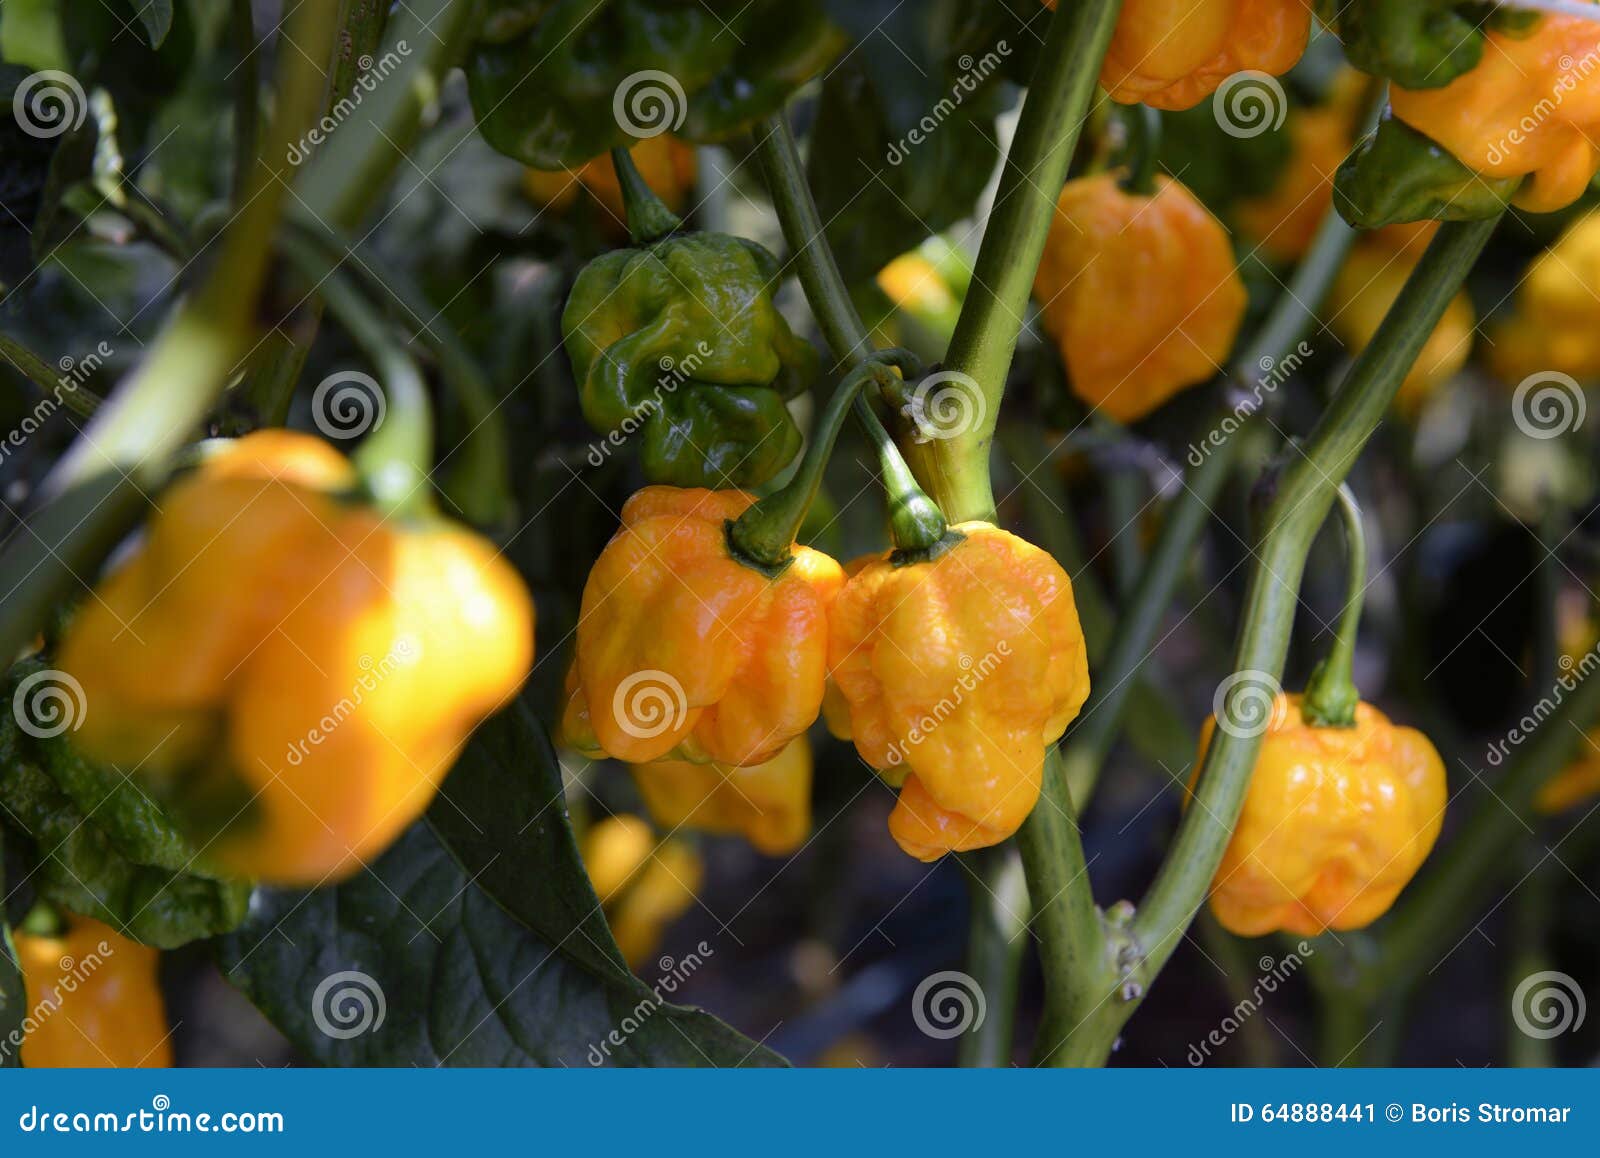 scotch bonnet yellow peppers